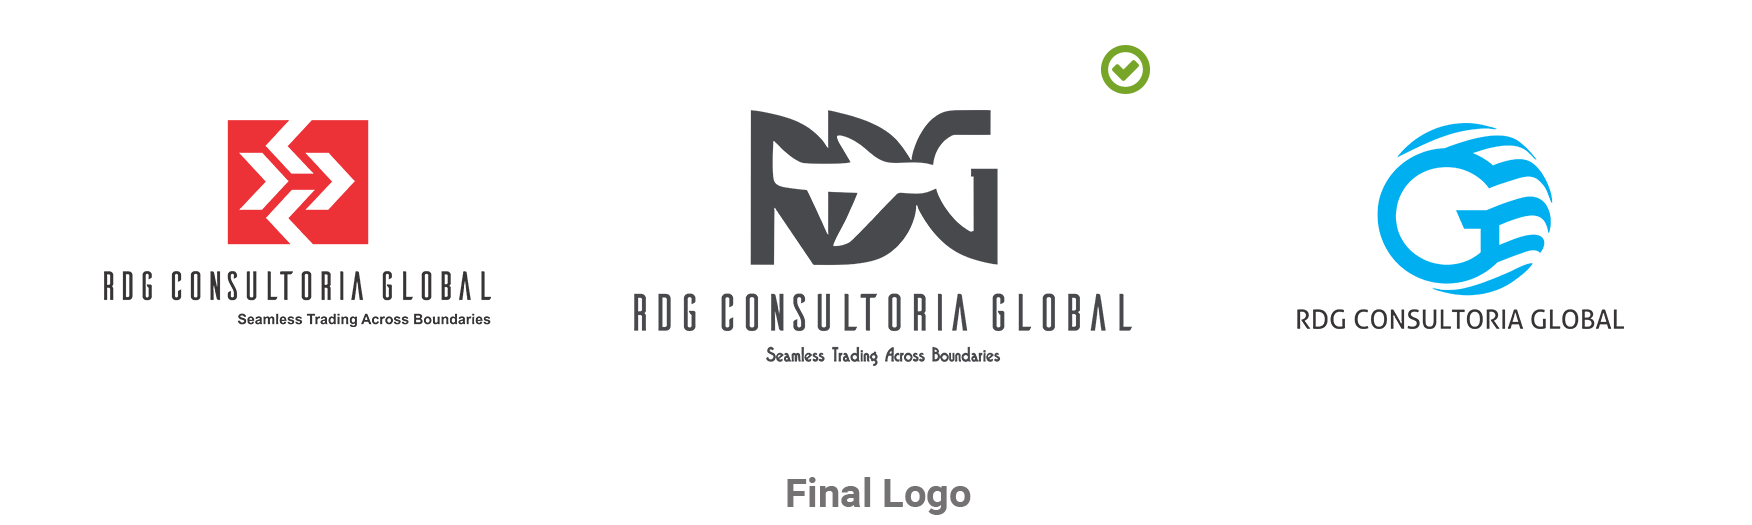 RDG Logo Design Concepts